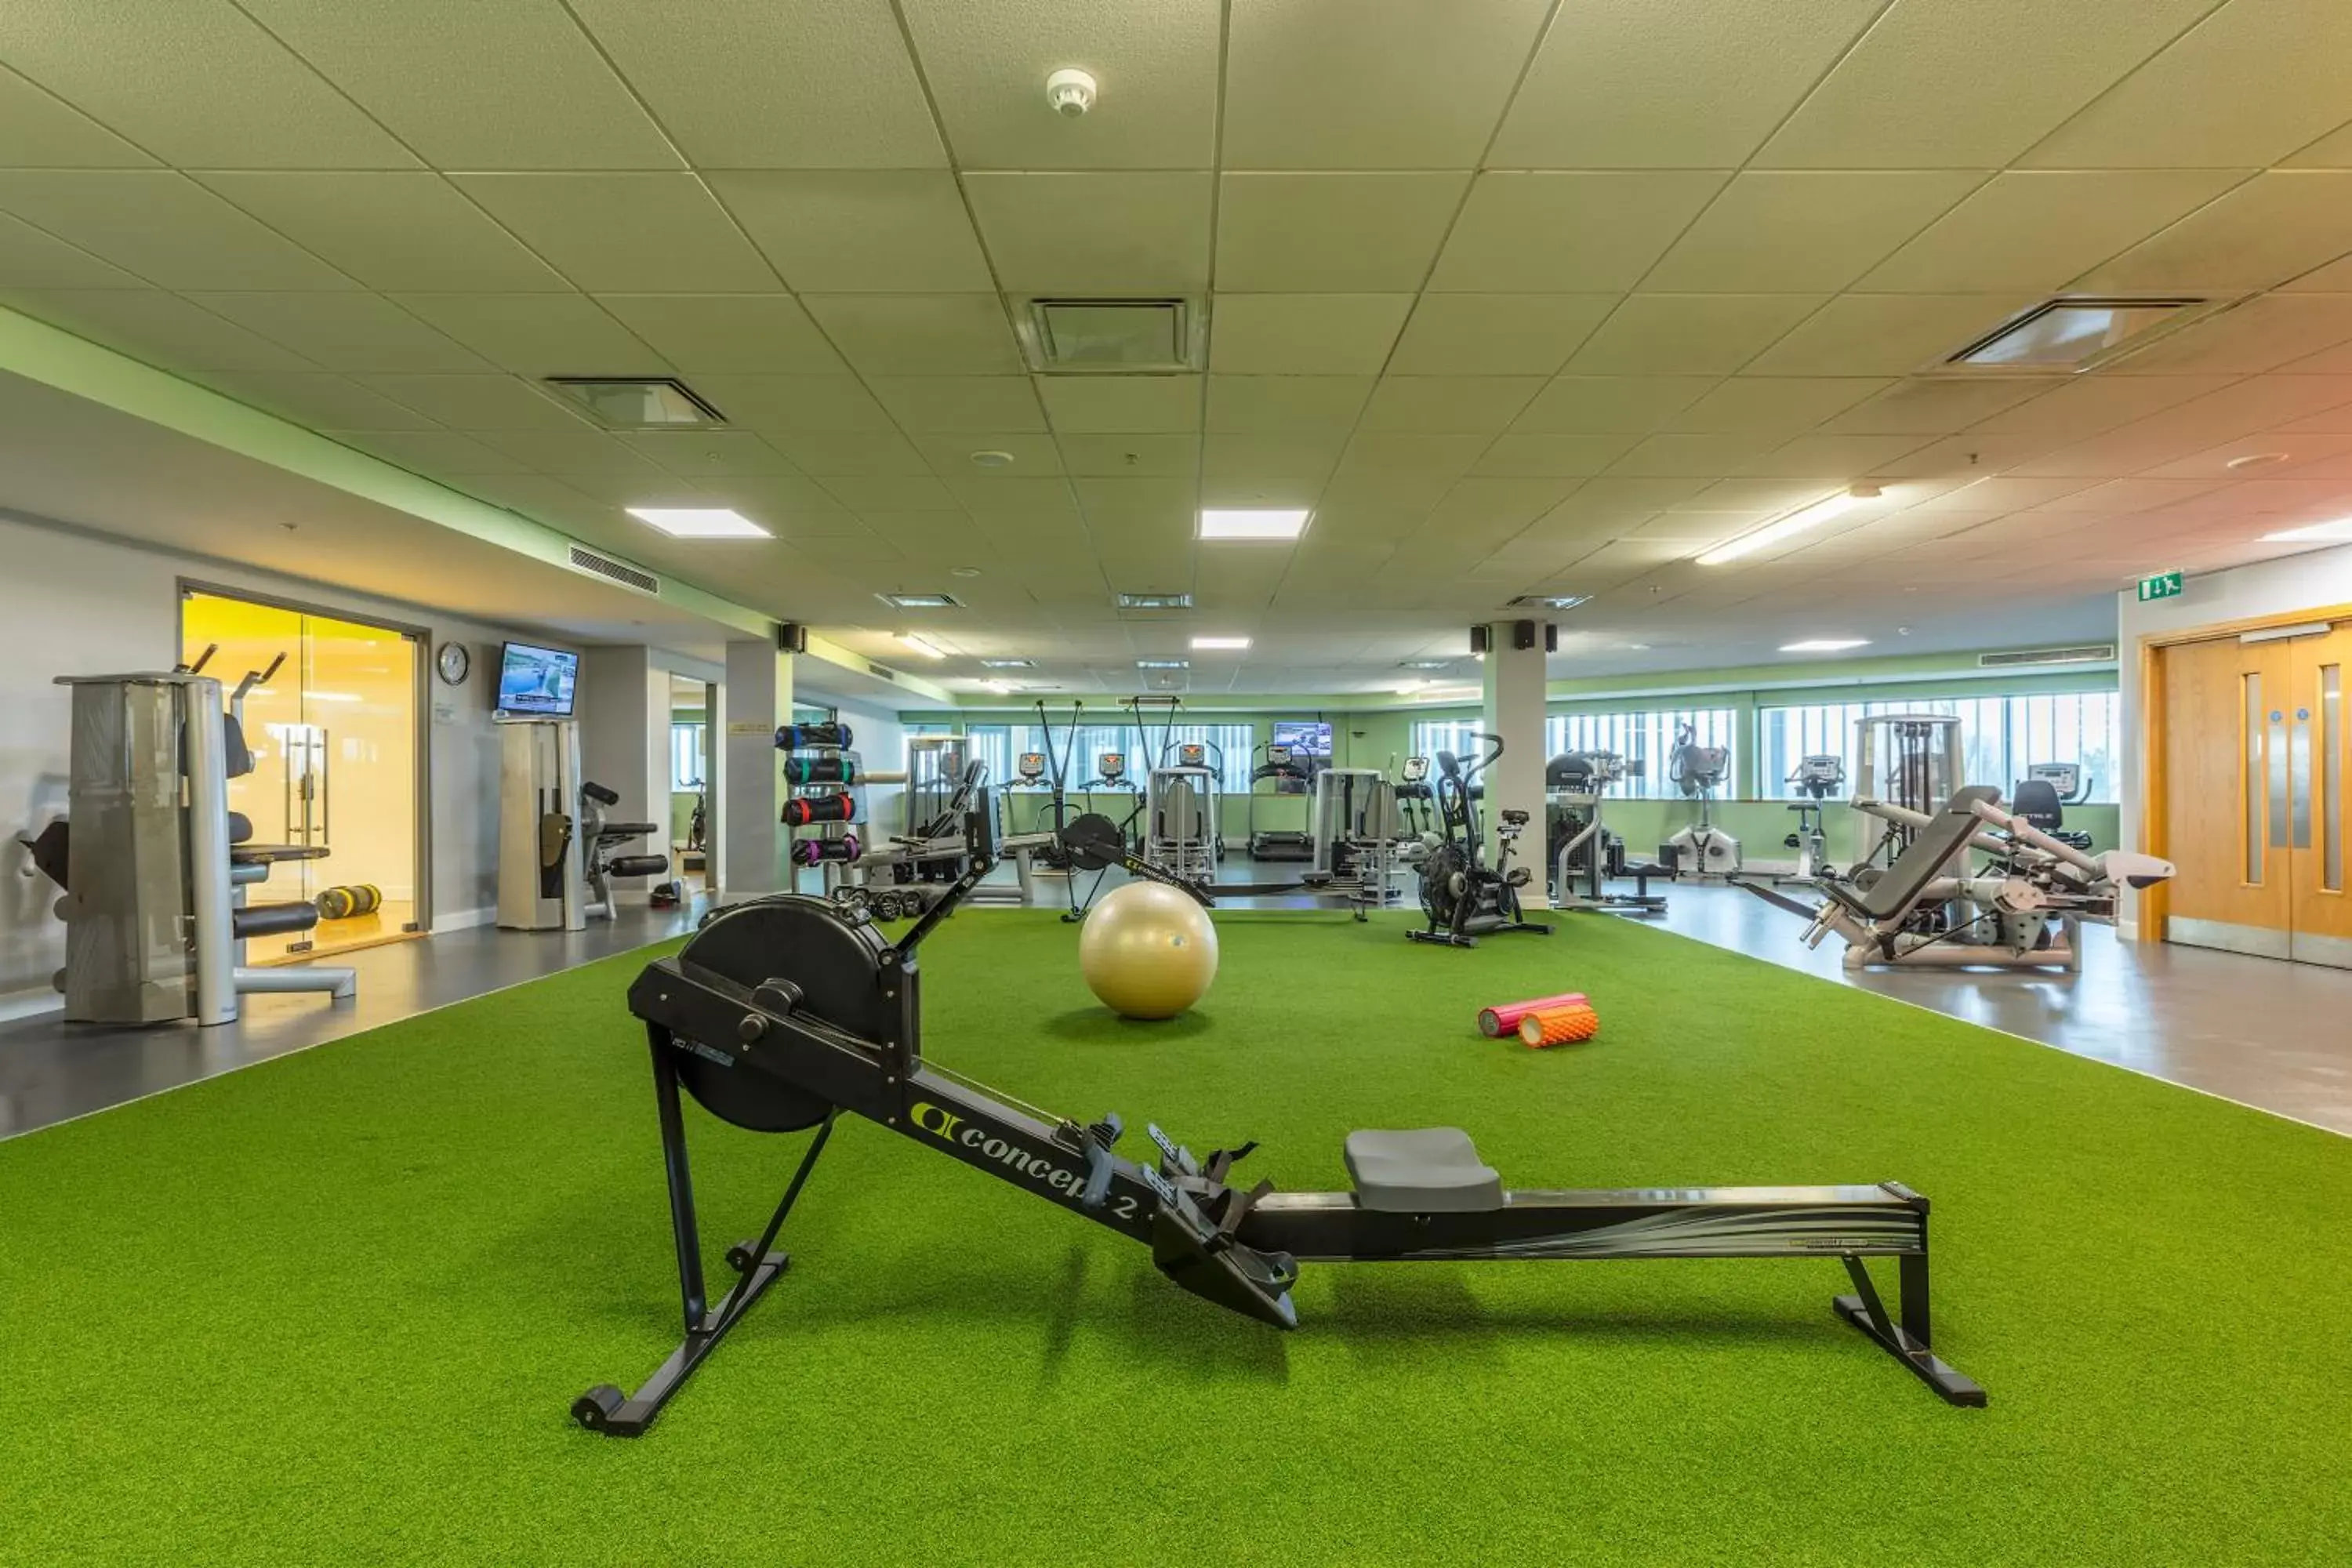 Fitness centre/facilities, Fitness Center/Facilities in Pillo Hotel Ashbourne Leisure Club & Spa